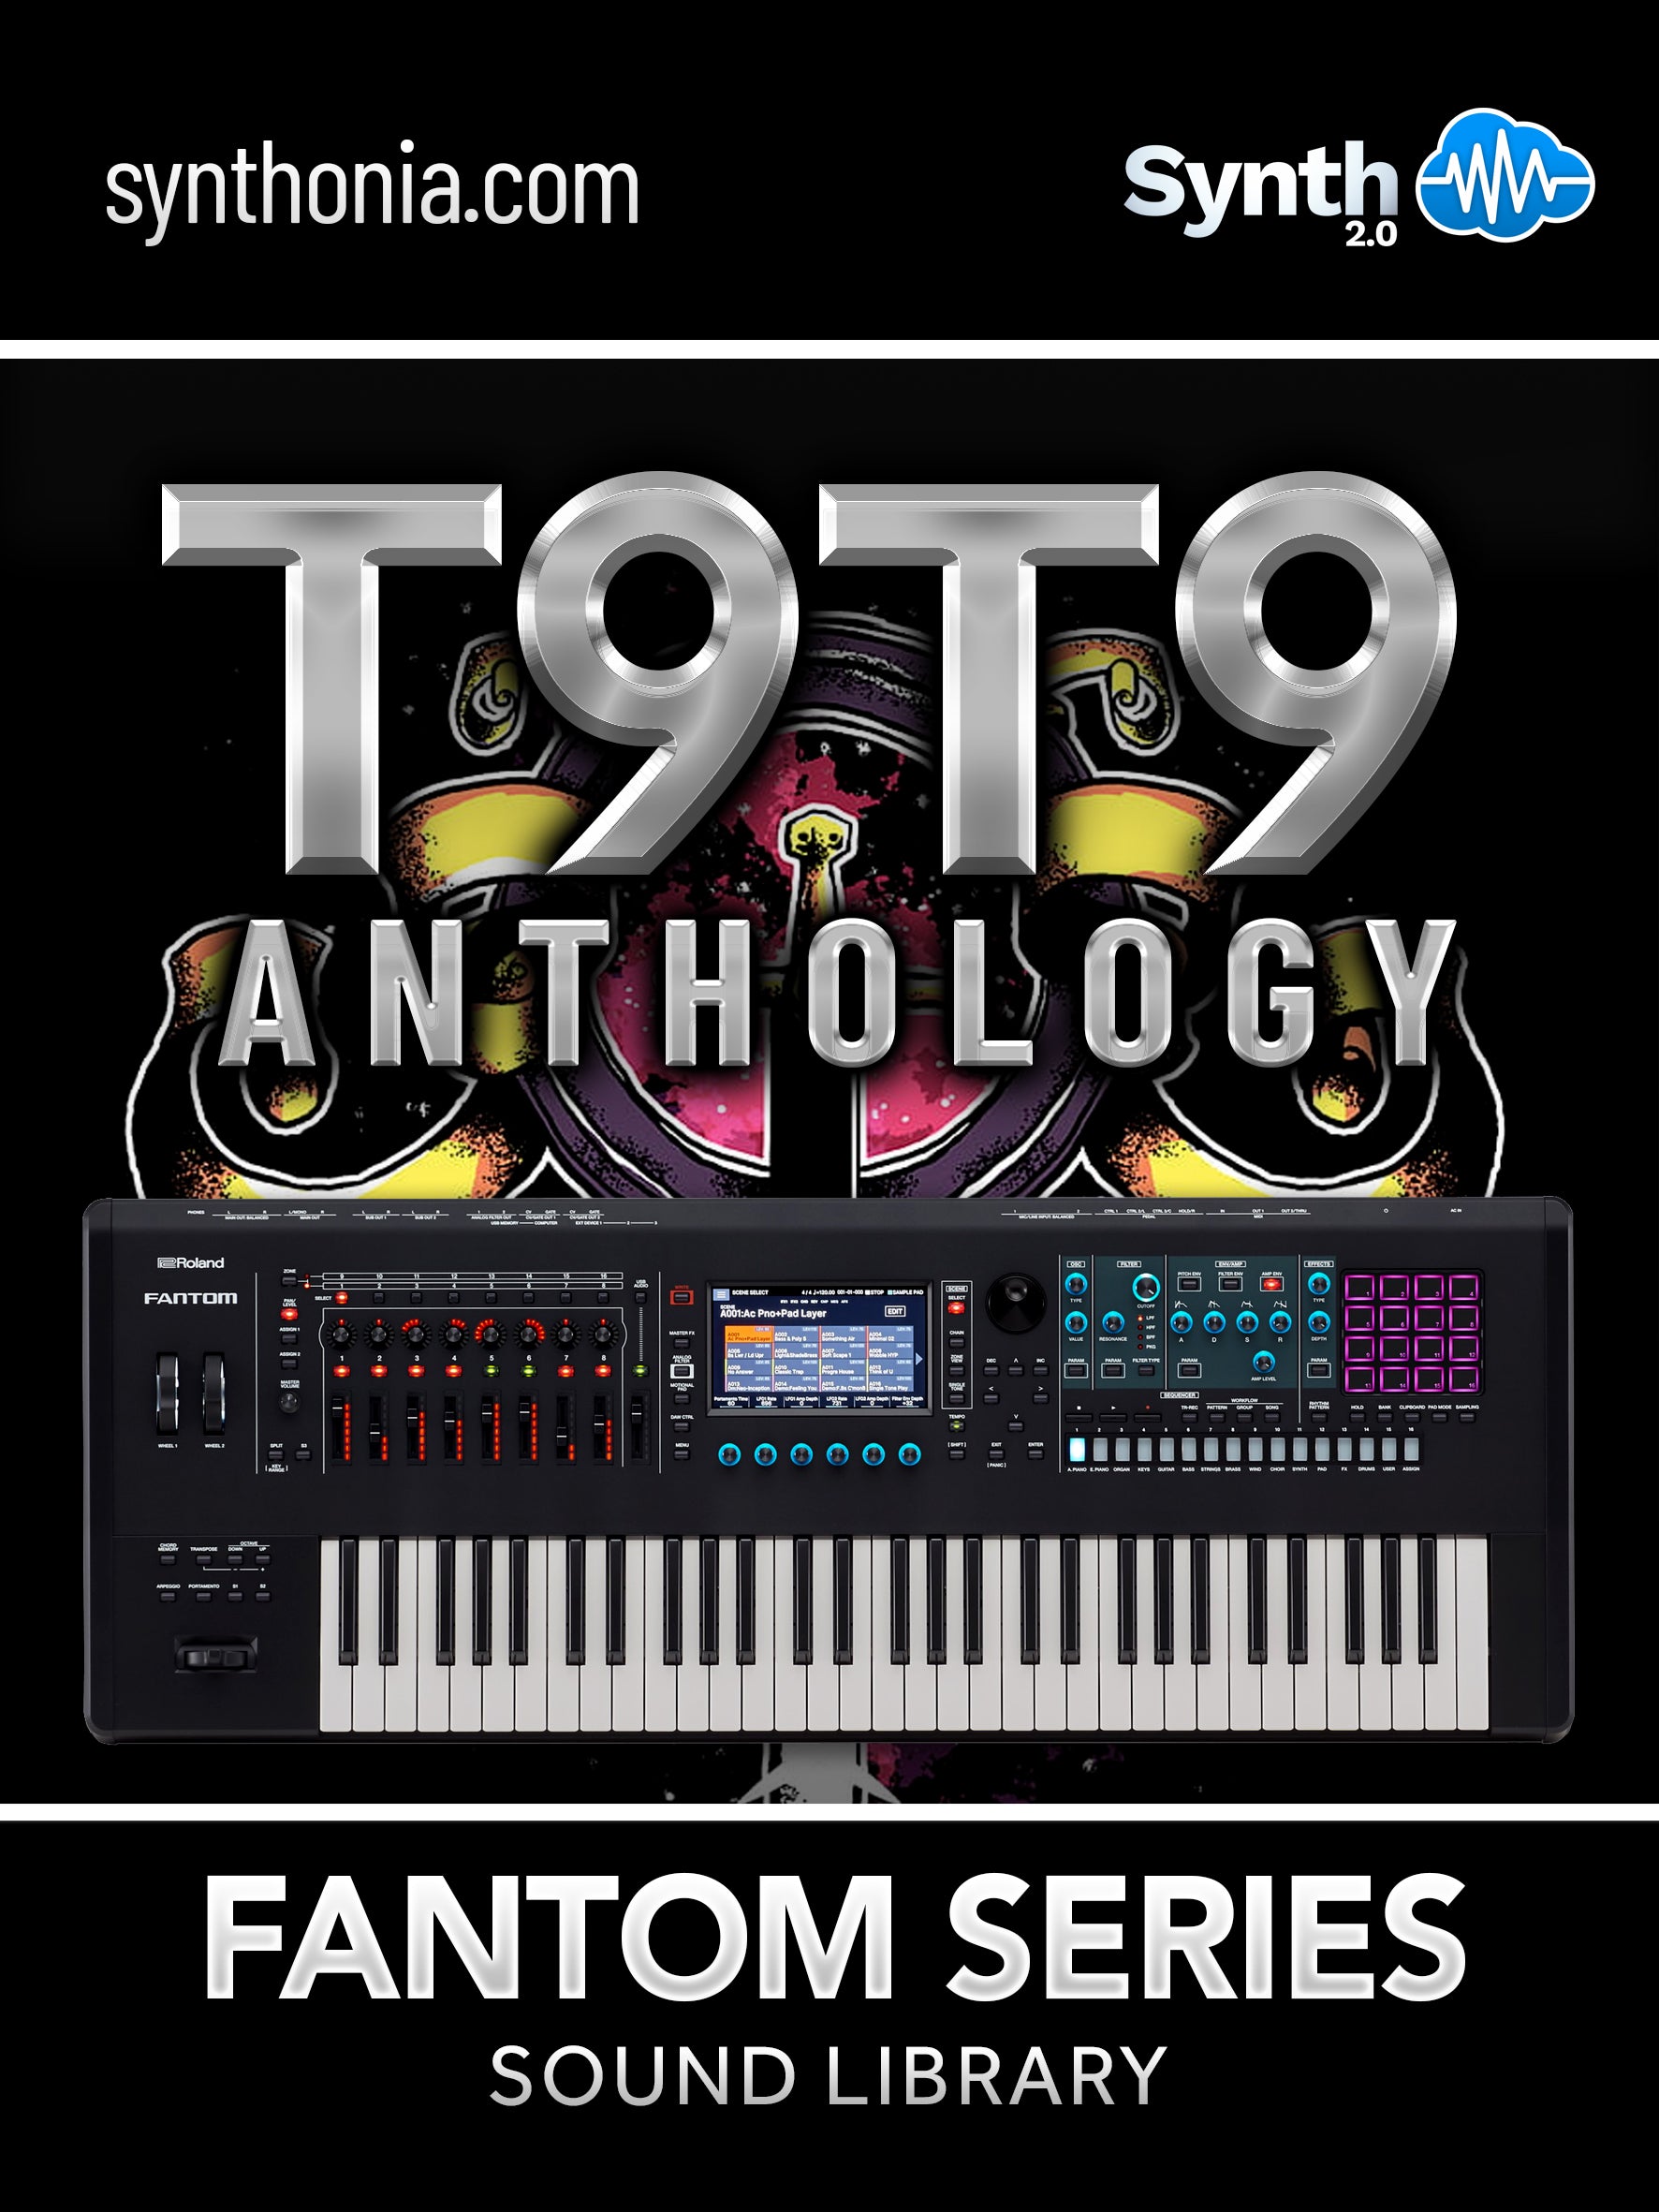 SCL452 - ( Bundle ) - The Floydian Wall Vol.1 + T9T9 Anthology - Fantom